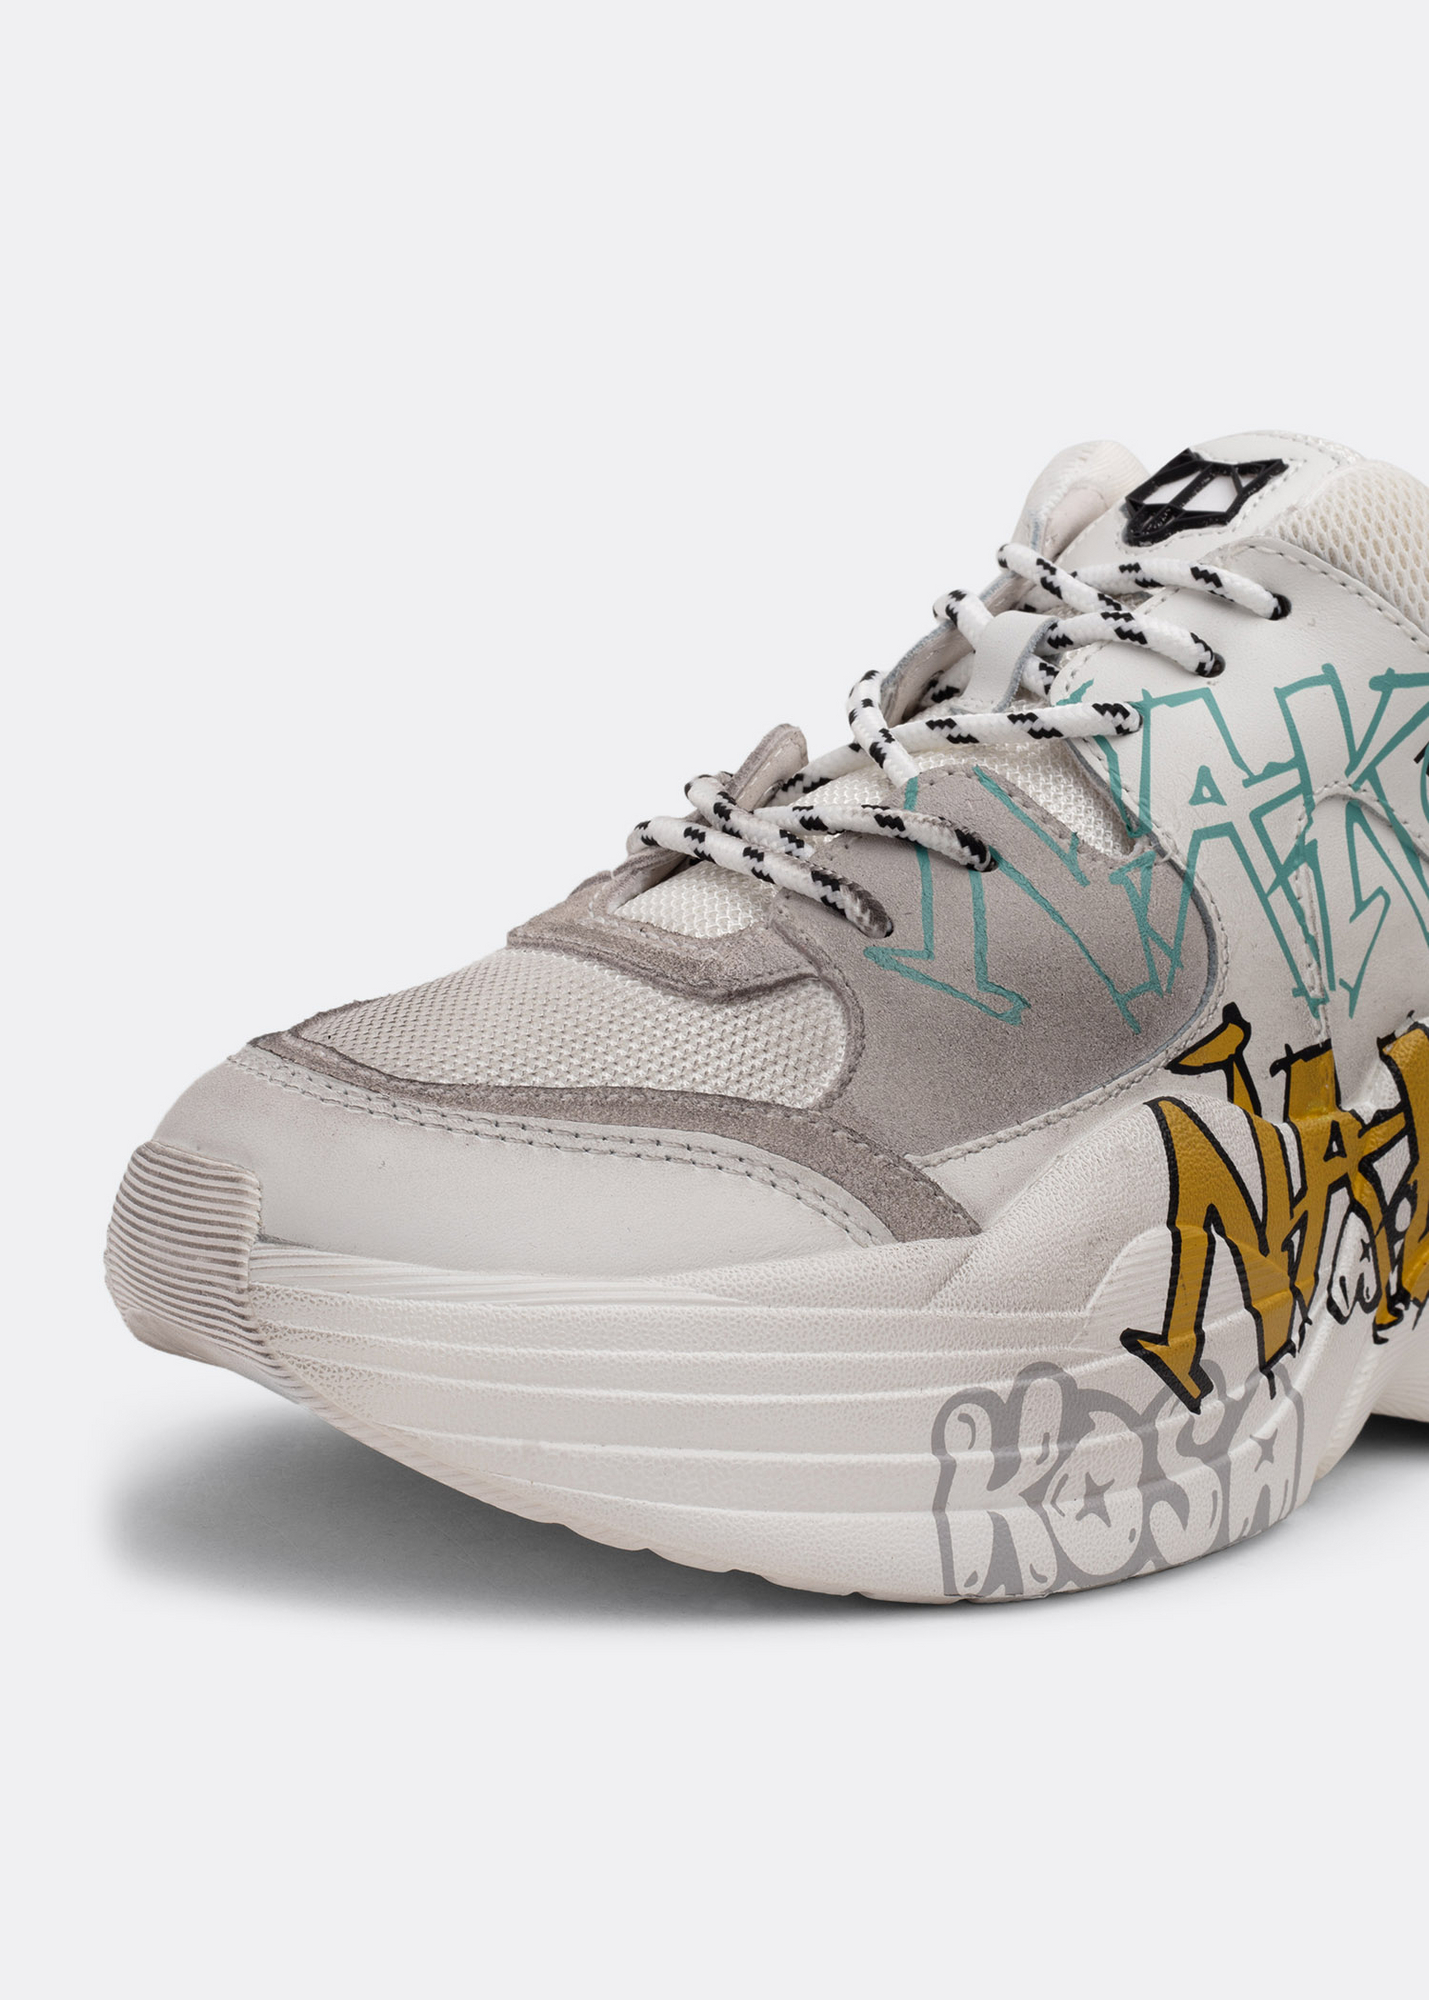 Naked Wolfe Titan Grafiti sneakers for Men - White in KSA | Level Shoes